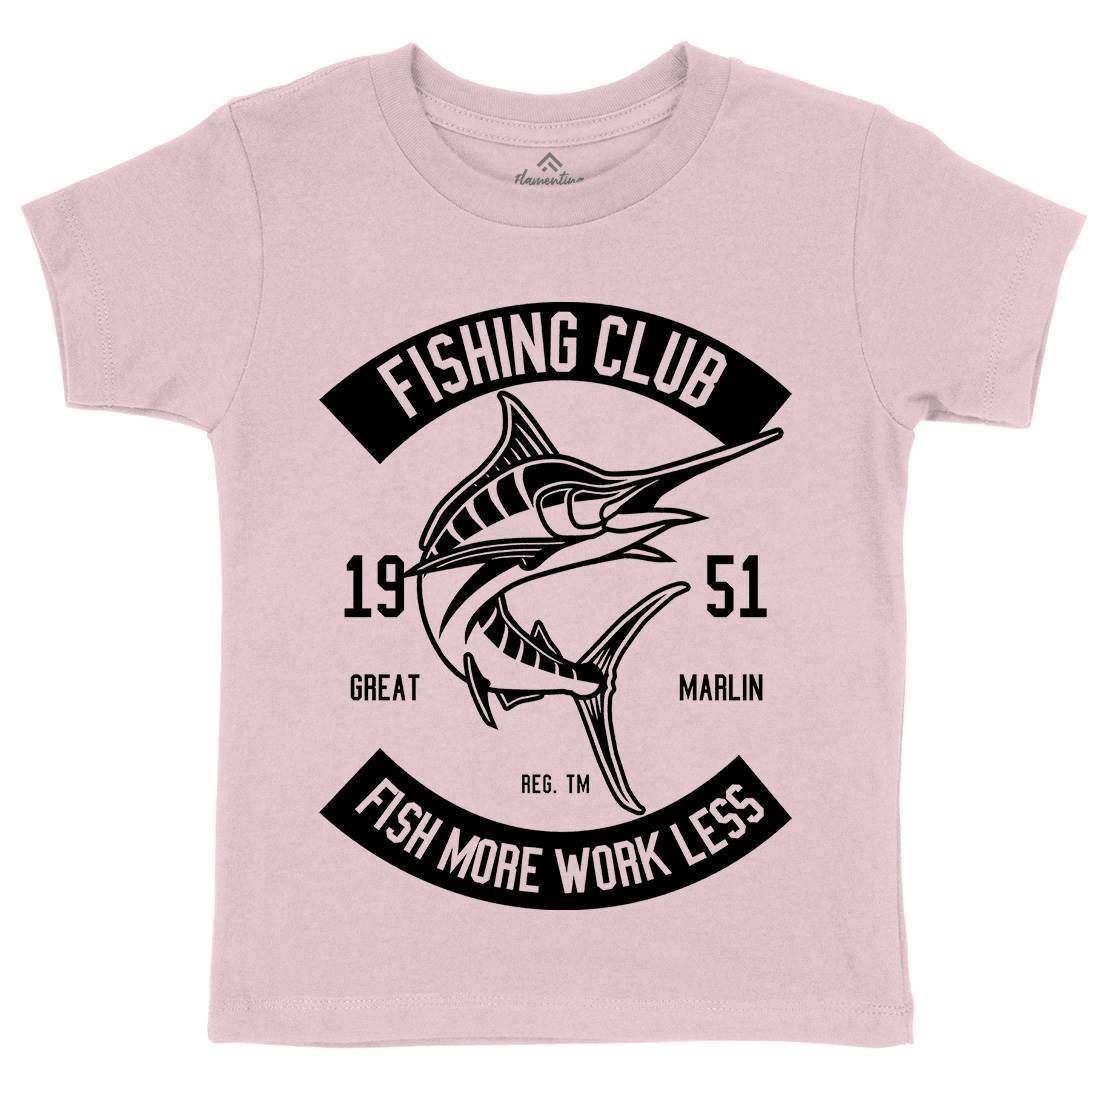 Club Kids Crew Neck T-Shirt Fishing B539